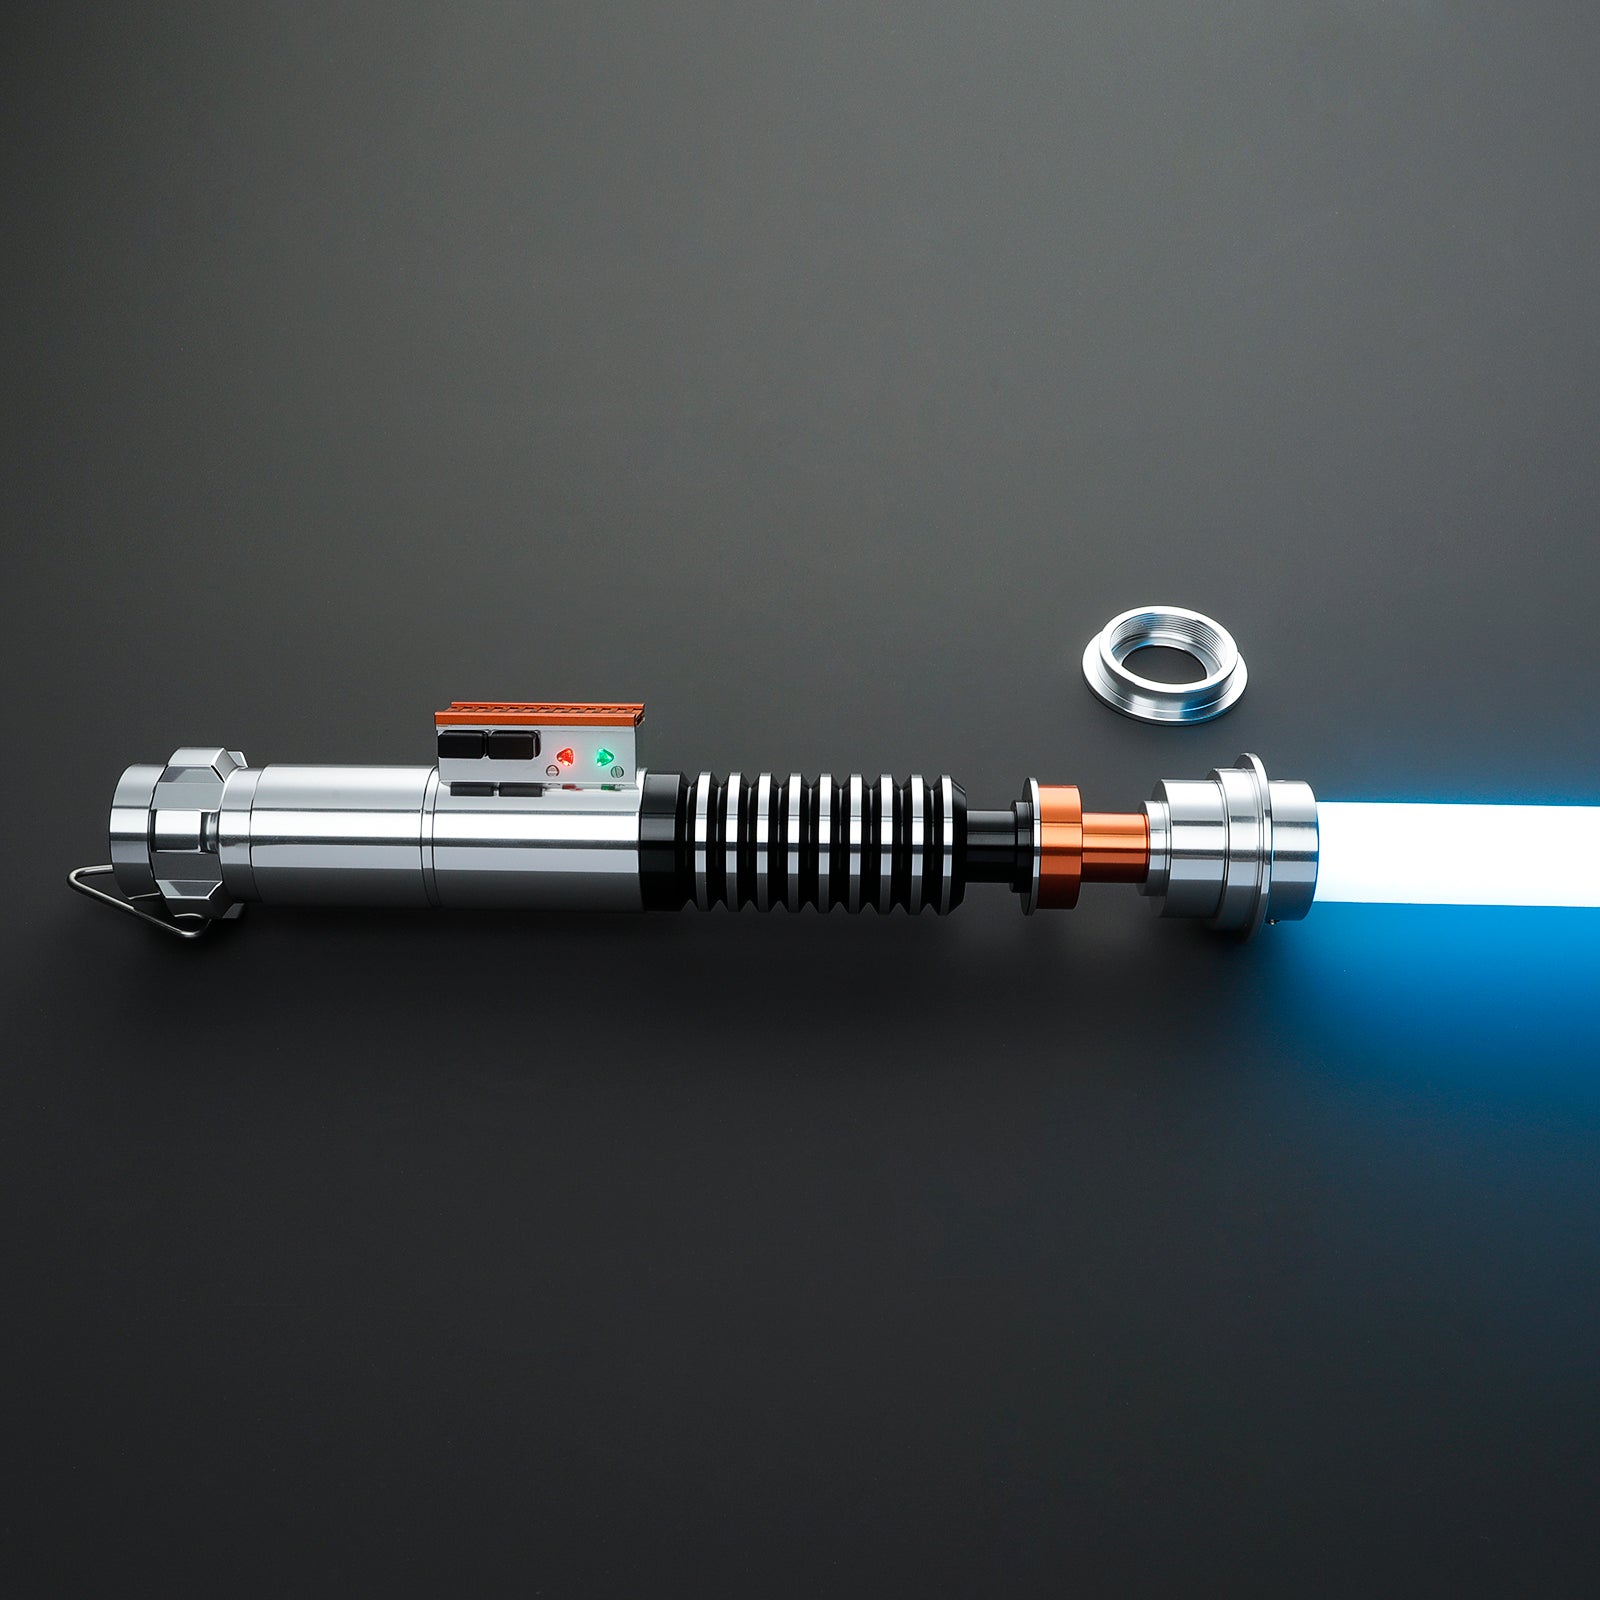 SaberCustom Luke Skywalker Lightsaber Xenopixel v3 Light Saber Infinite Colors Changing NO059-1